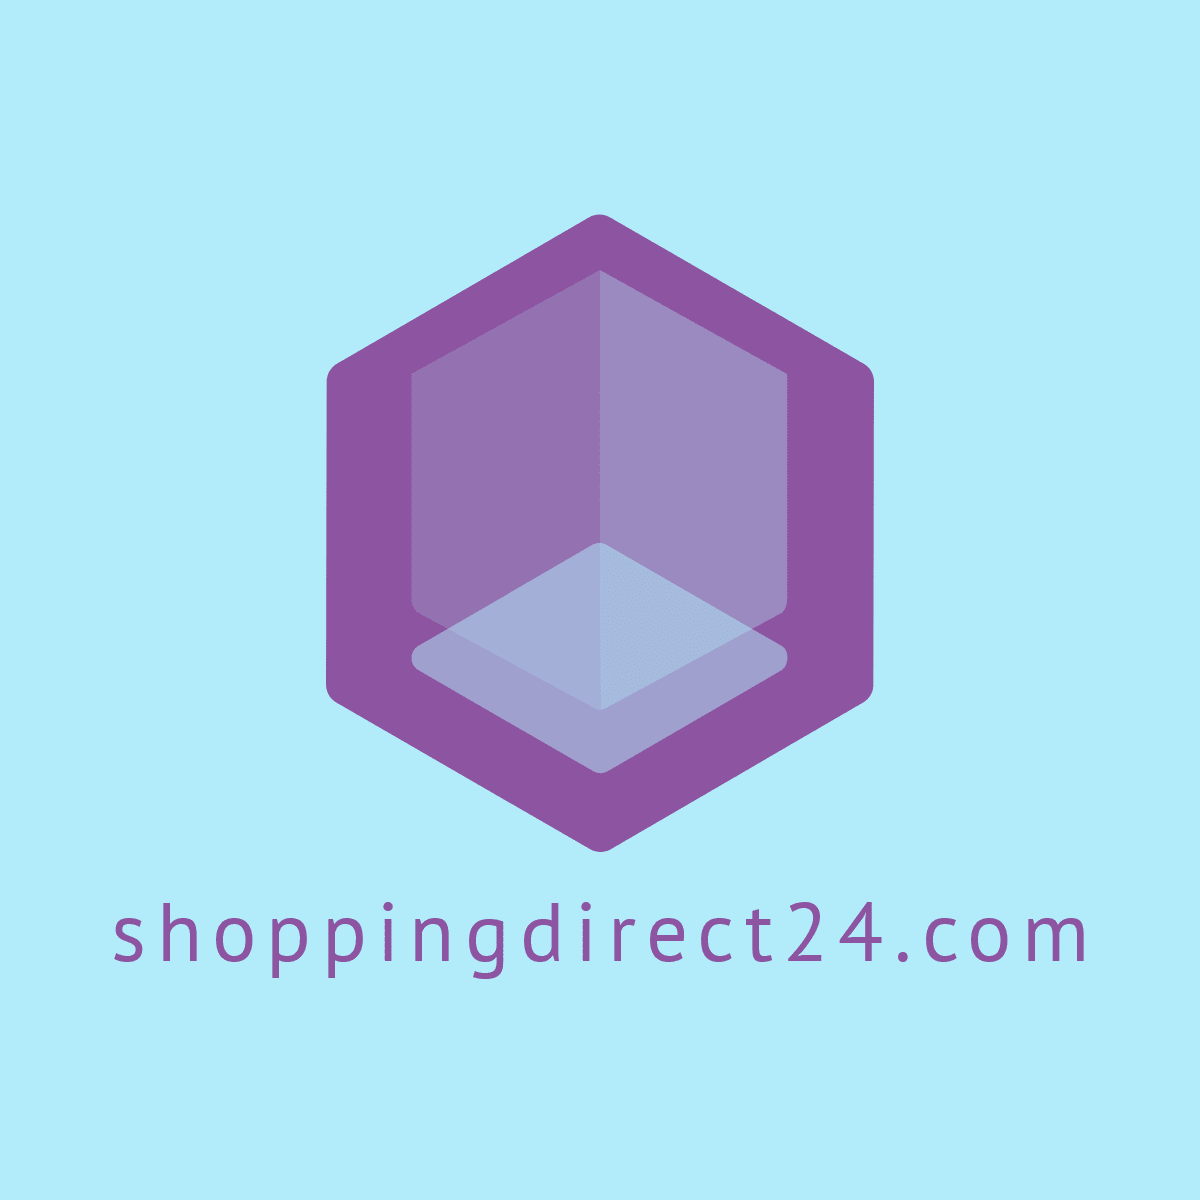 shoppingdirect24.com Coupon Codes